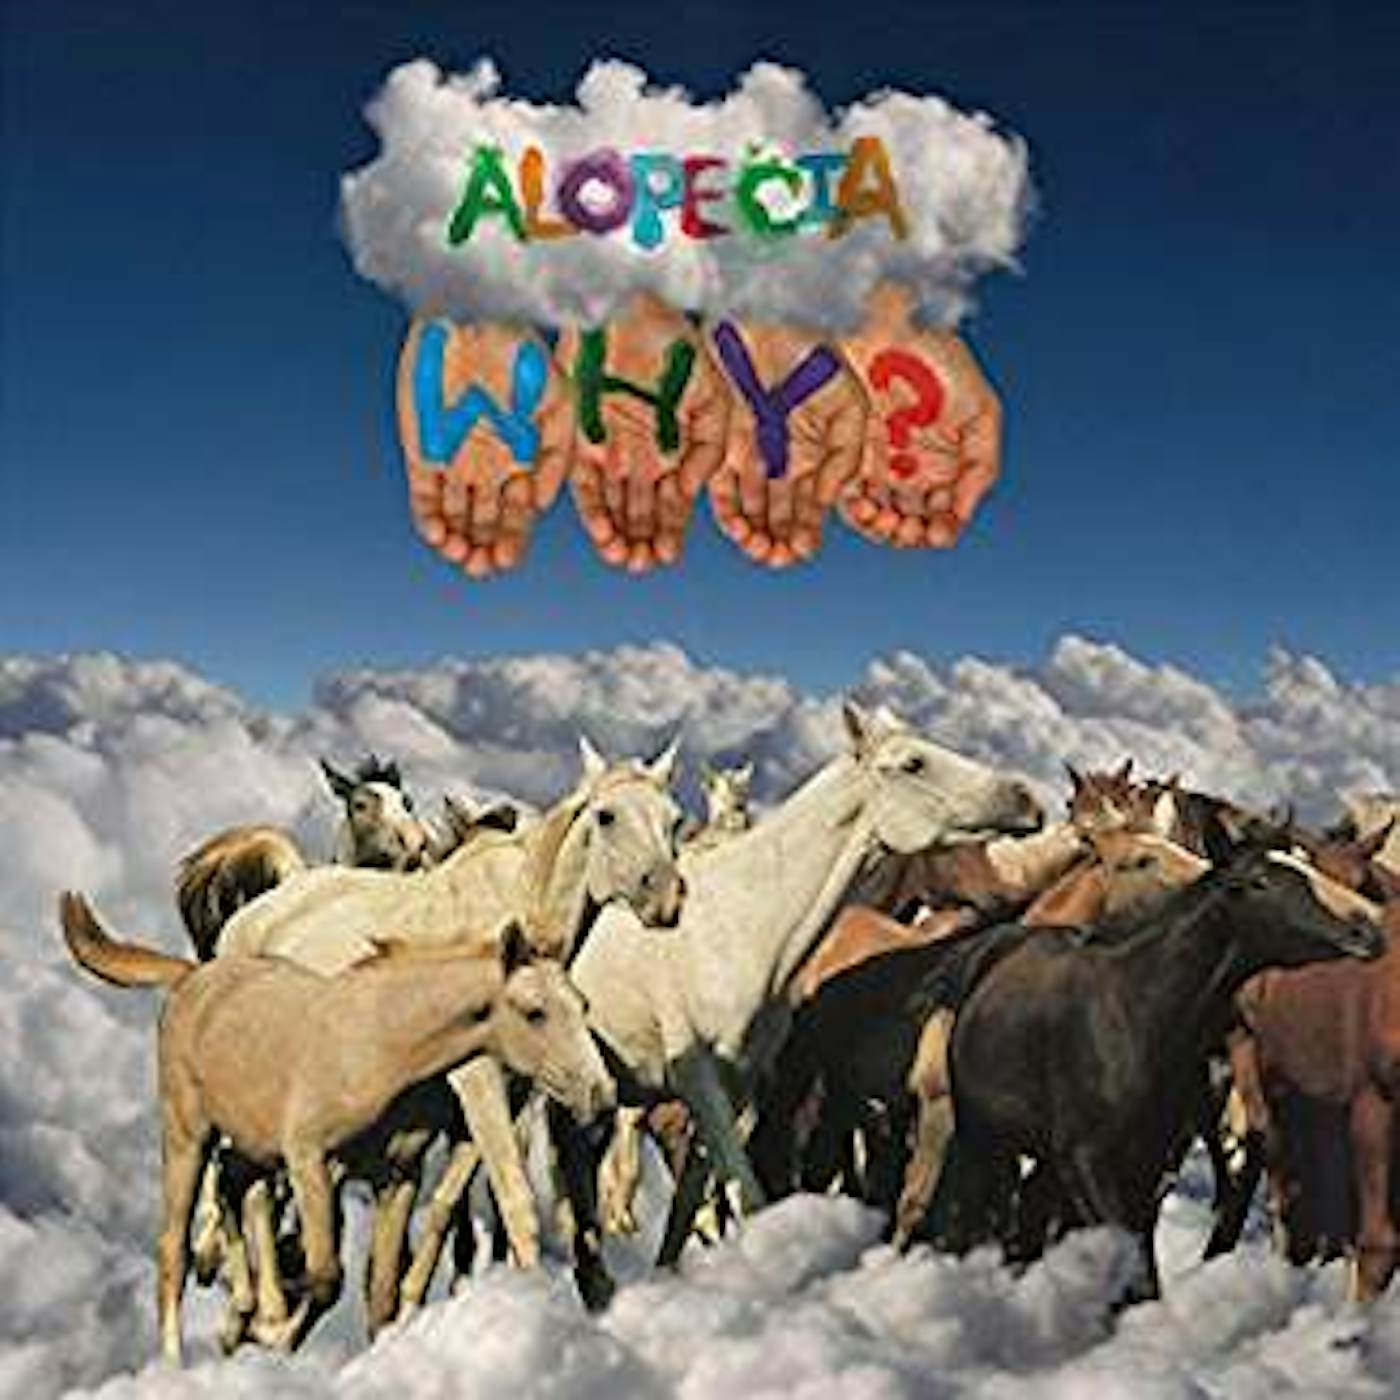 Why ALOPECIA (10 YEAR ANNIVERSARY EDITION) CD